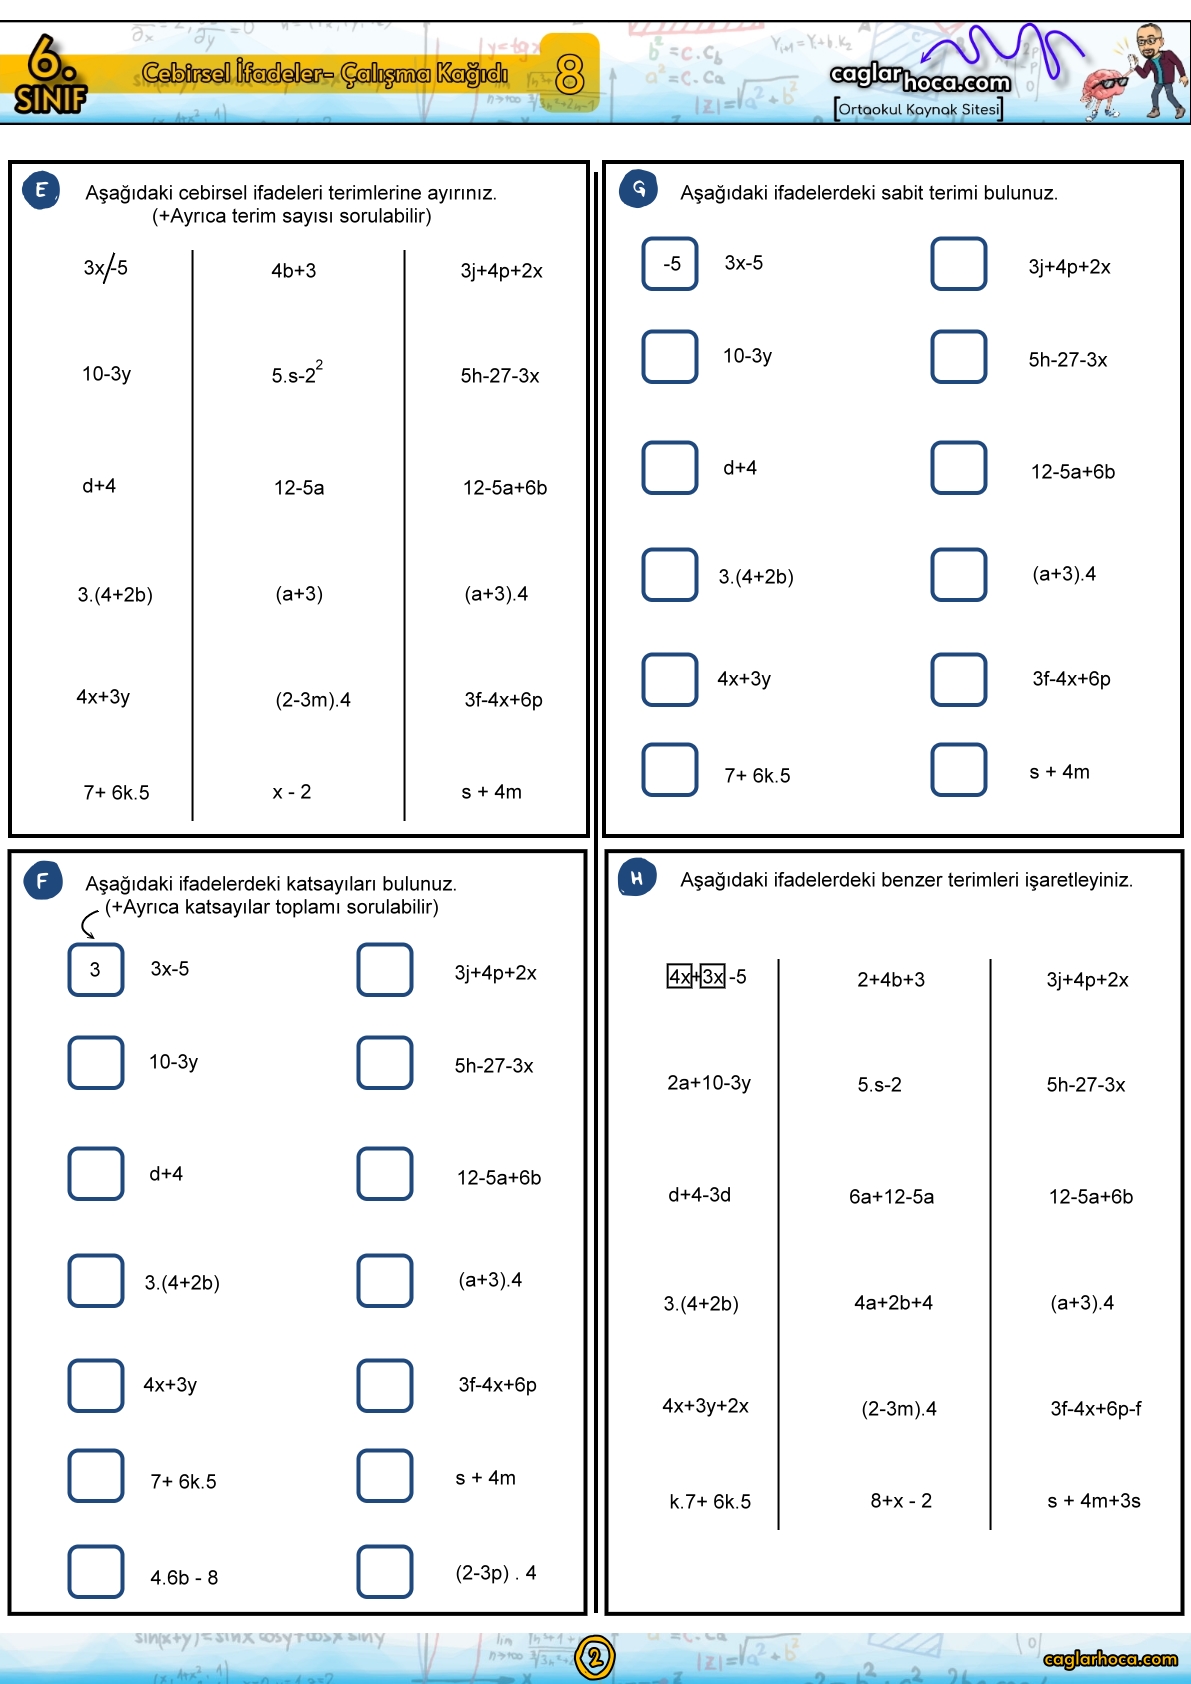 cebirsel ifadeler,6. sınıf matematik cebirsel ifadeler çalışma kağıdı,cebirsel ifadeler soru çözümü,6. sınıf matematik cebirsel ifadeler,cebirsel ifadeler pdf